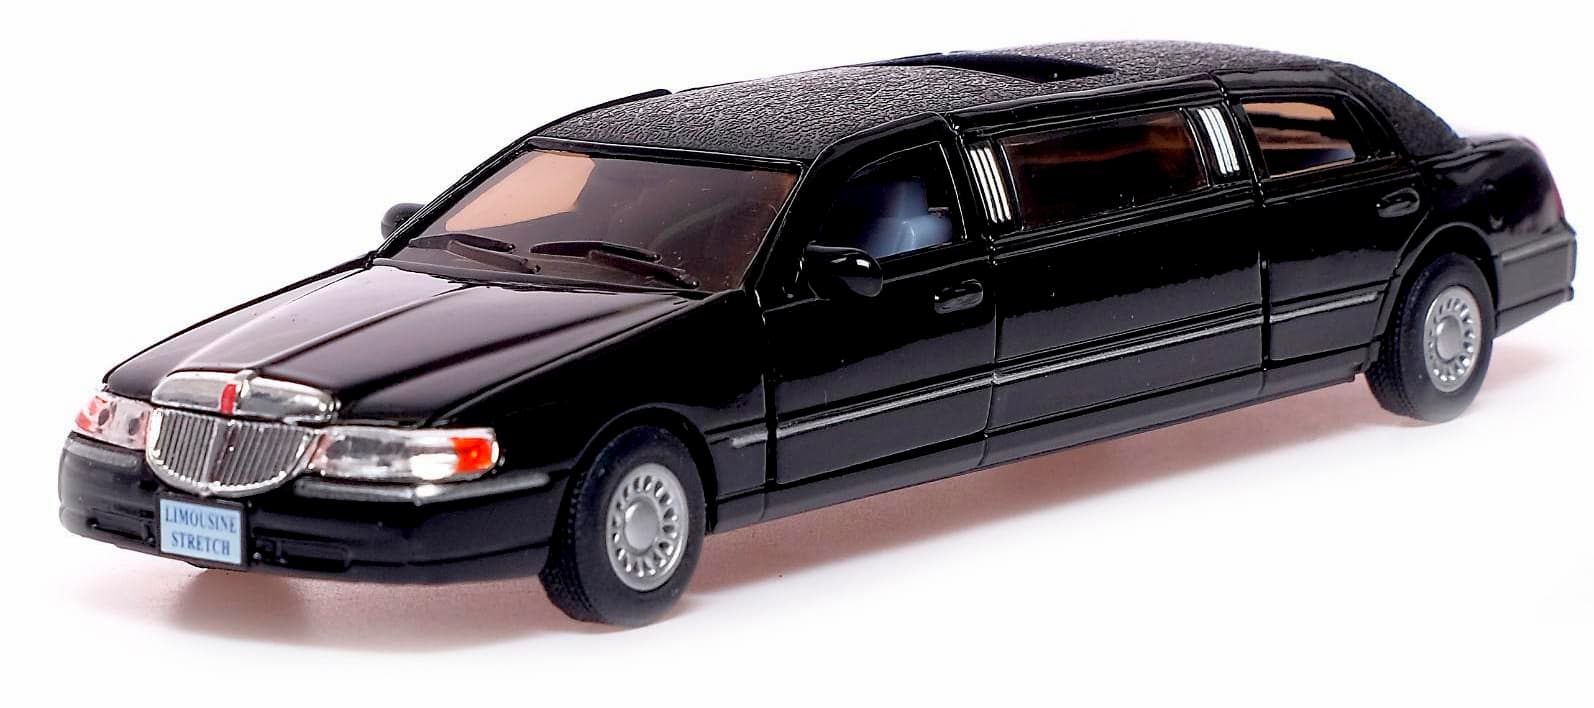 Металлическая машинка Kinsmart 1:38 «1999 Lincoln Town Car Stretch Limousine» KT7001WH в коробке / Микс